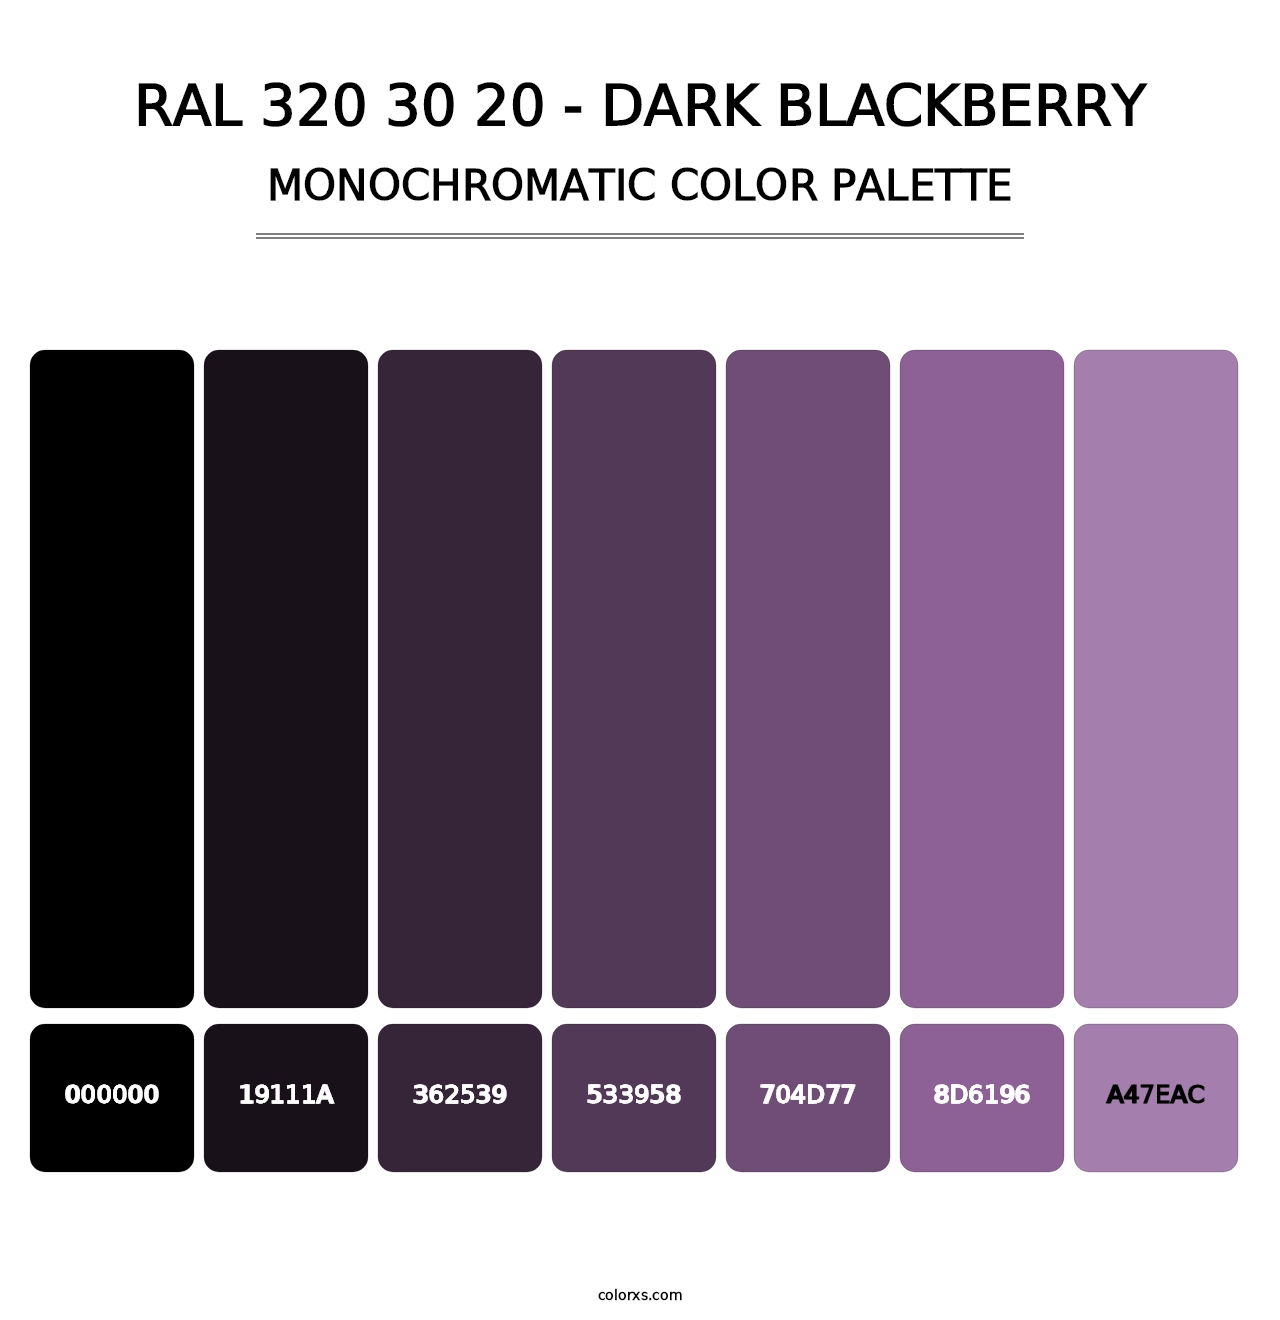 RAL 320 30 20 - Dark Blackberry - Monochromatic Color Palette